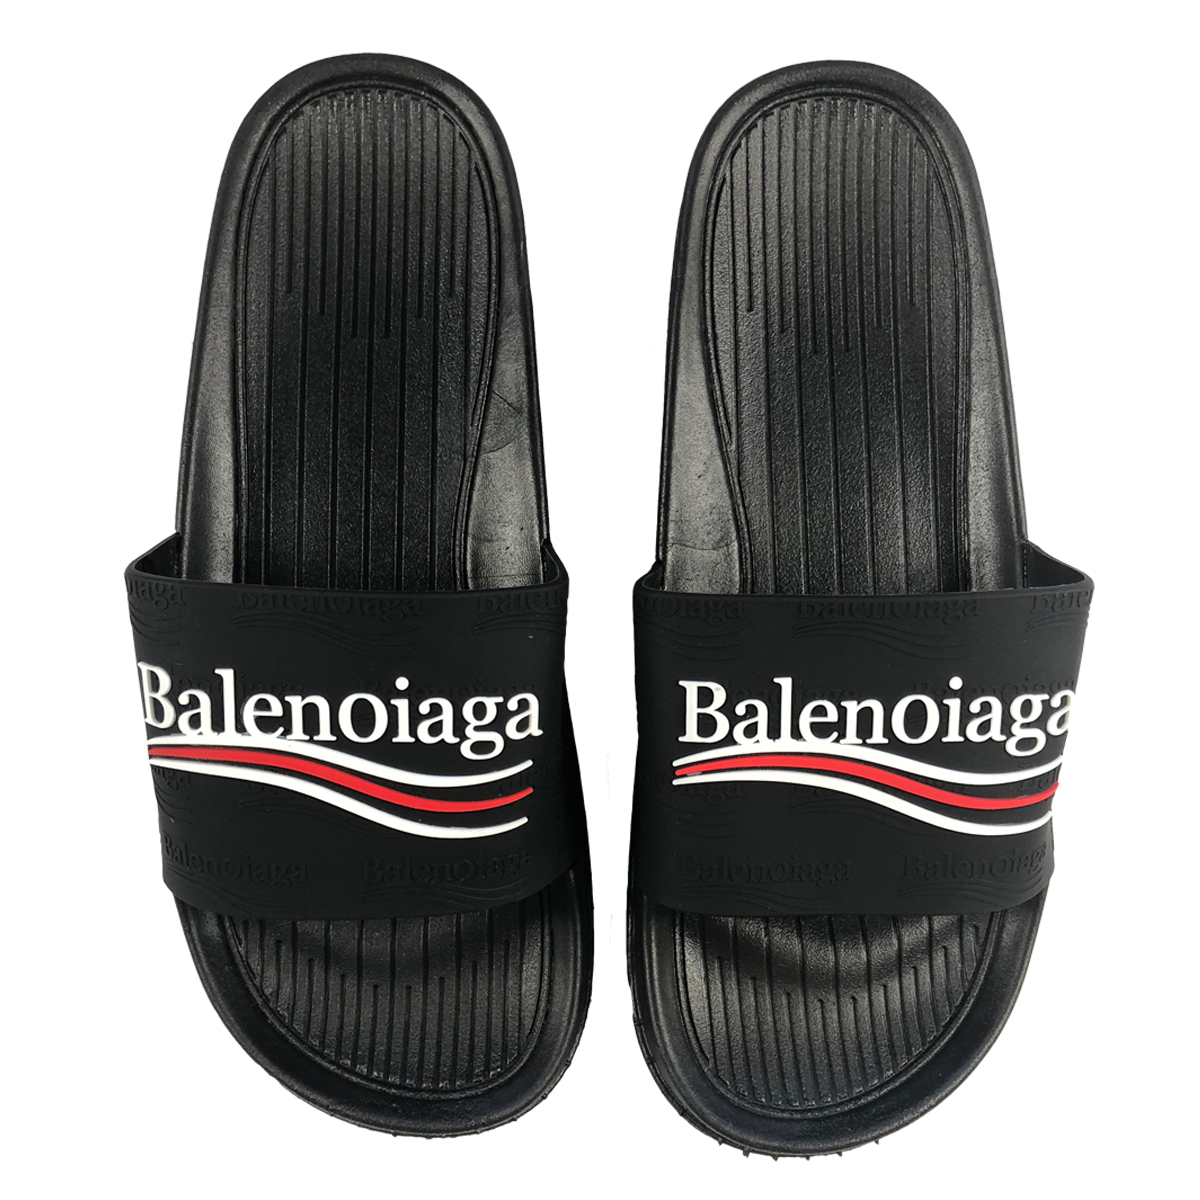 Balenoiaga Slides (BLACK)